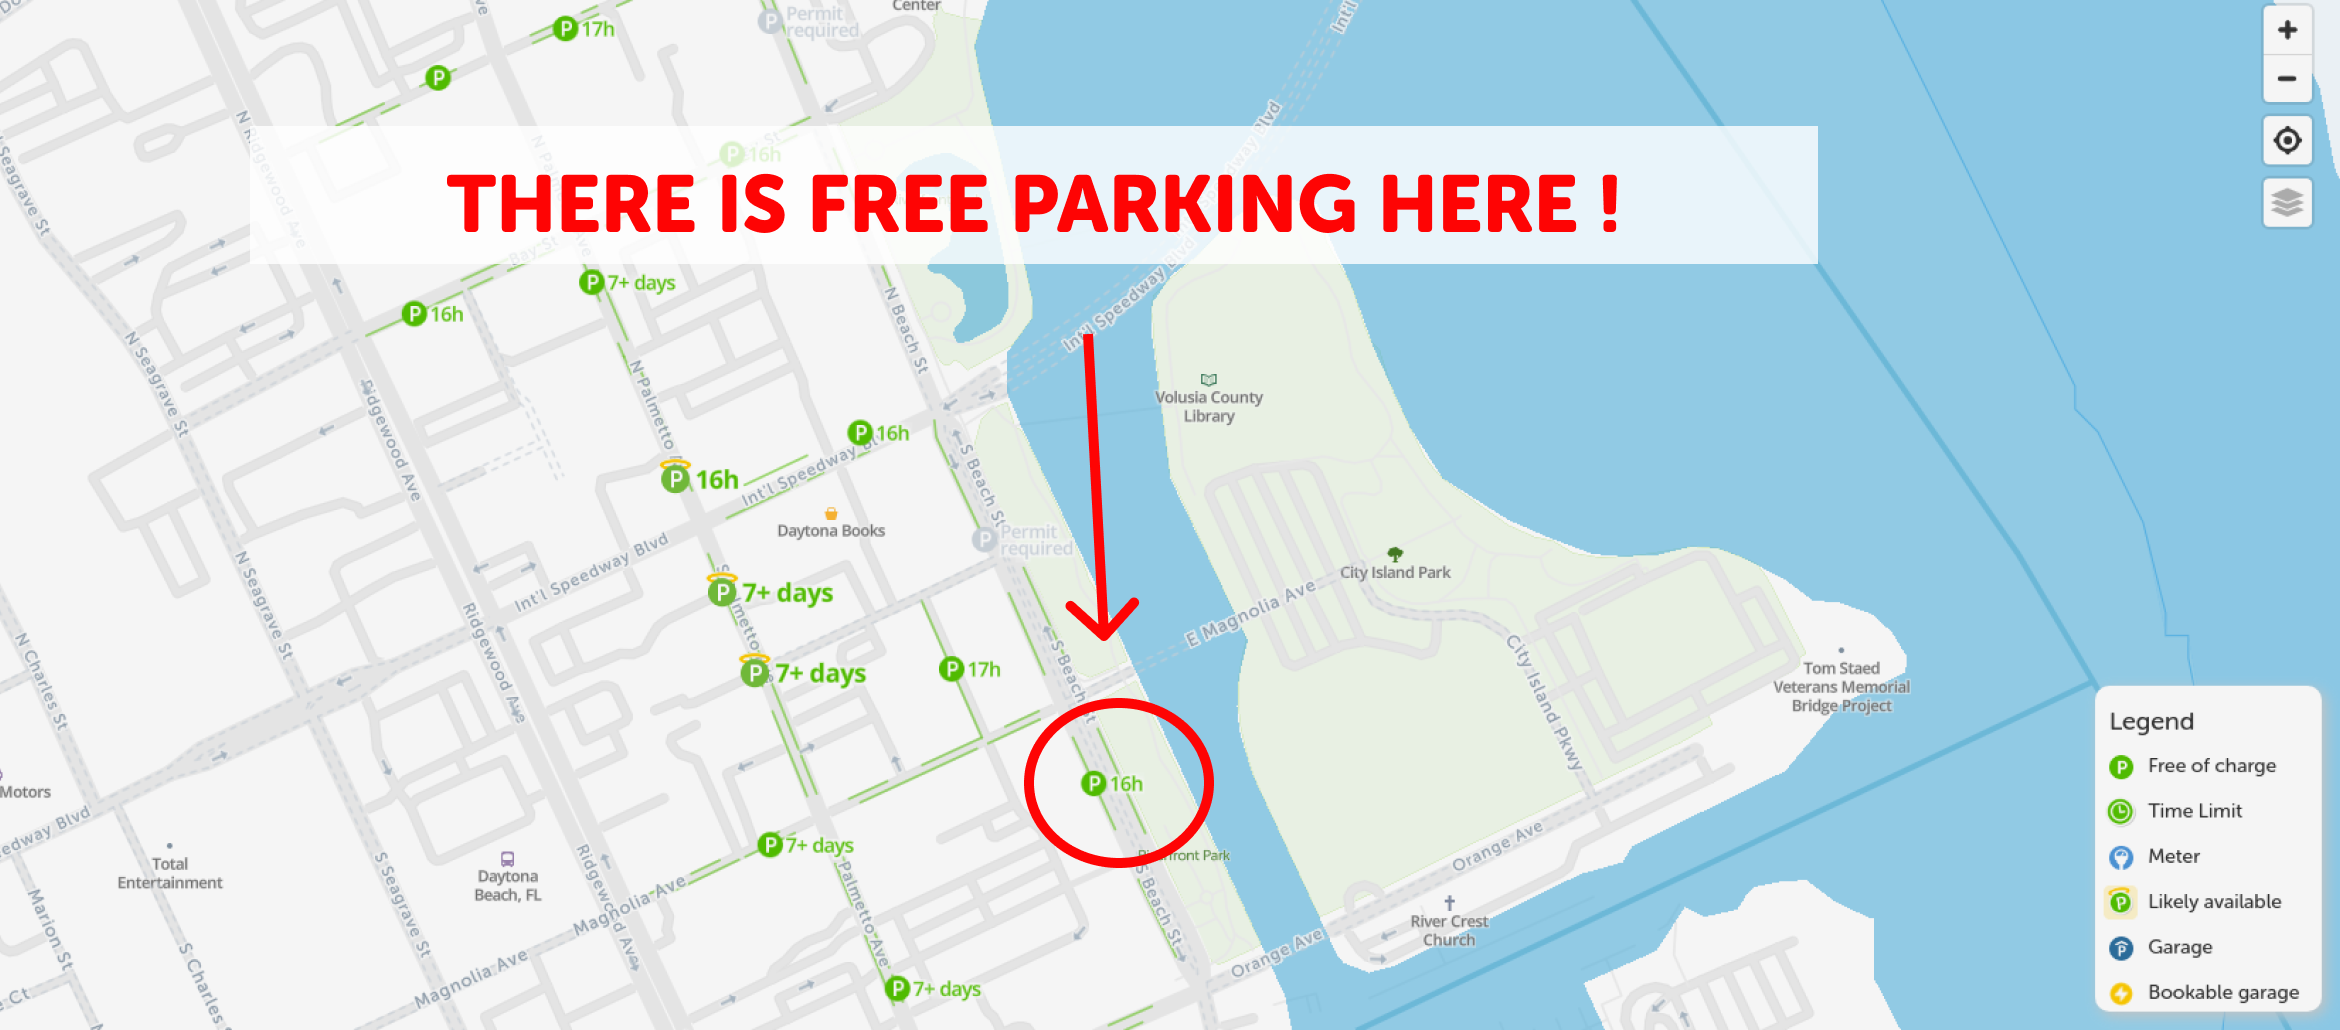 2021 map of free parking in daytona beach - spotangels